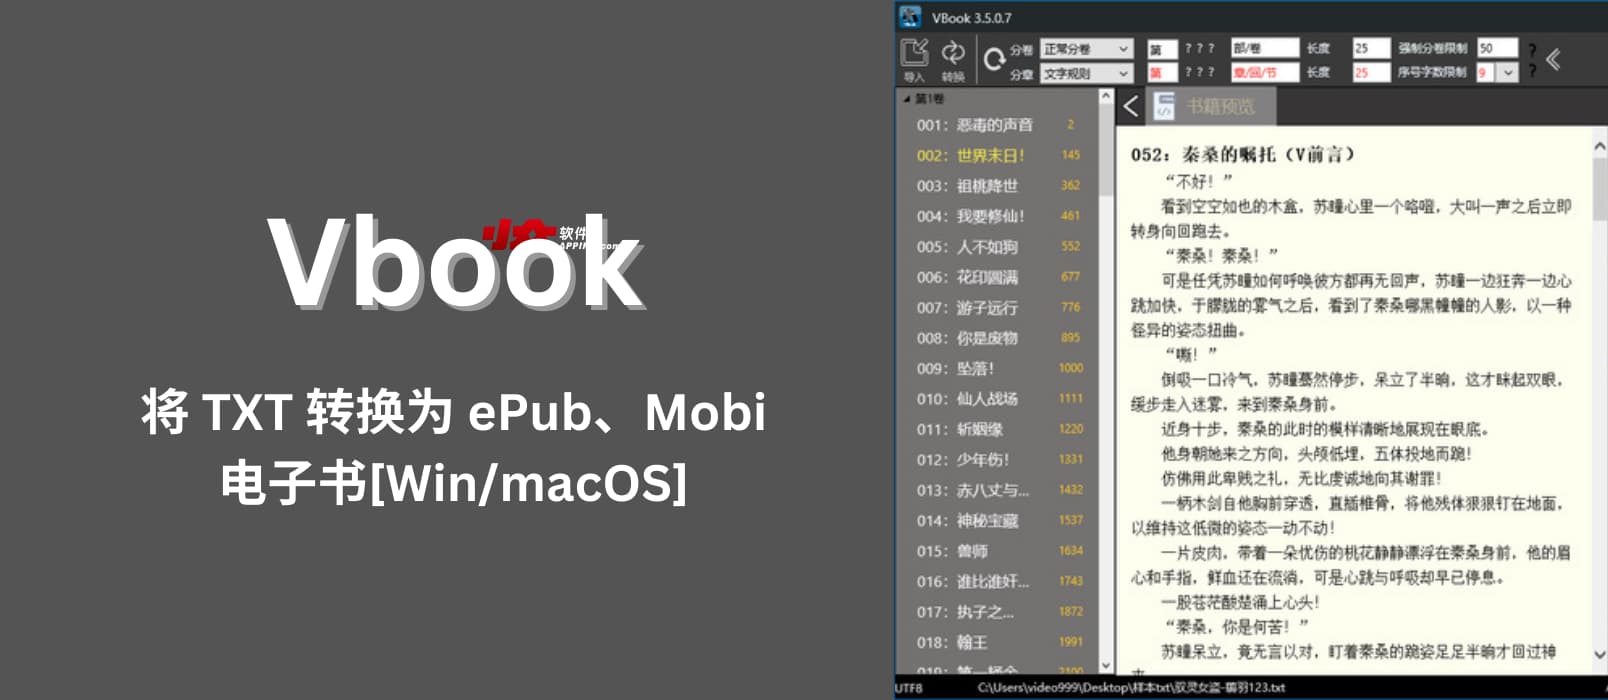 Vbook - 将 TXT 转换为 ePub、Mobi 电子书格式，支持分卷、目录、封面、行距尺寸等[Win/macOS]